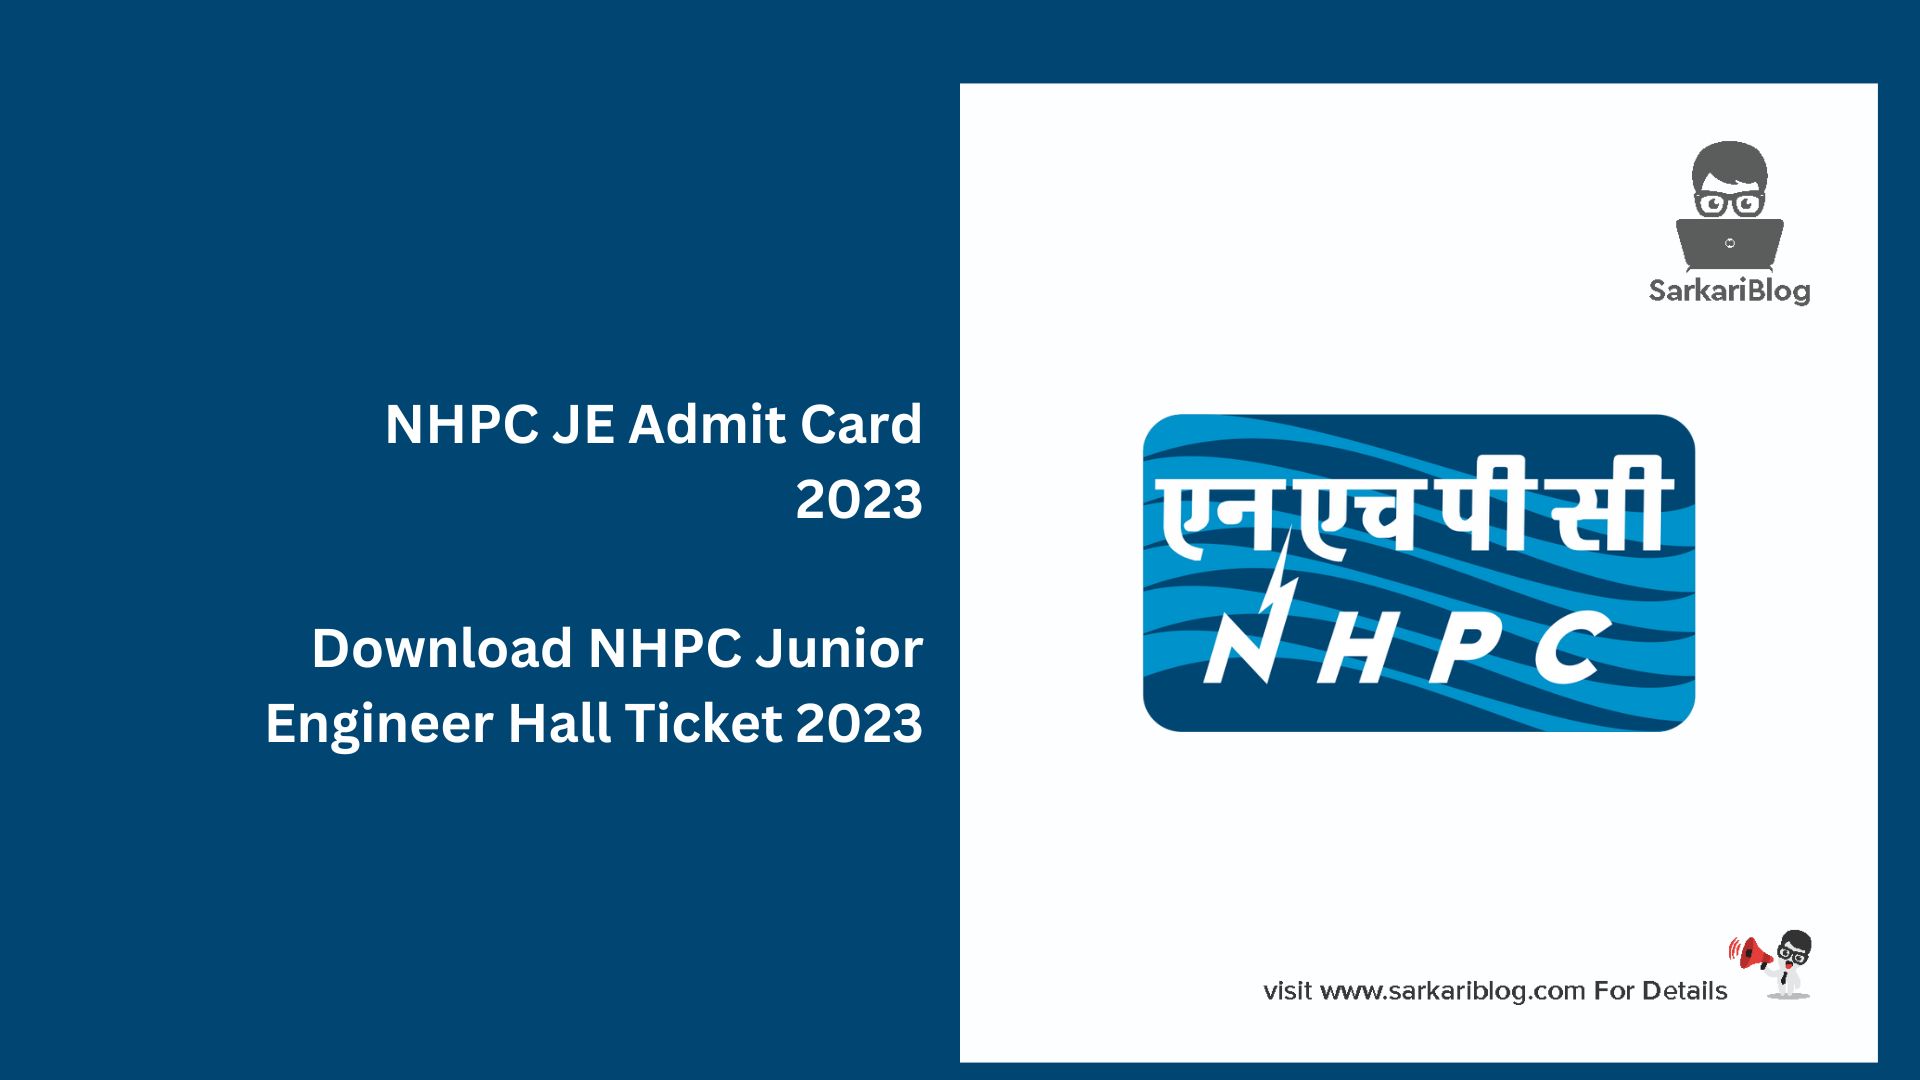 NHPC JE Admit Card 2023